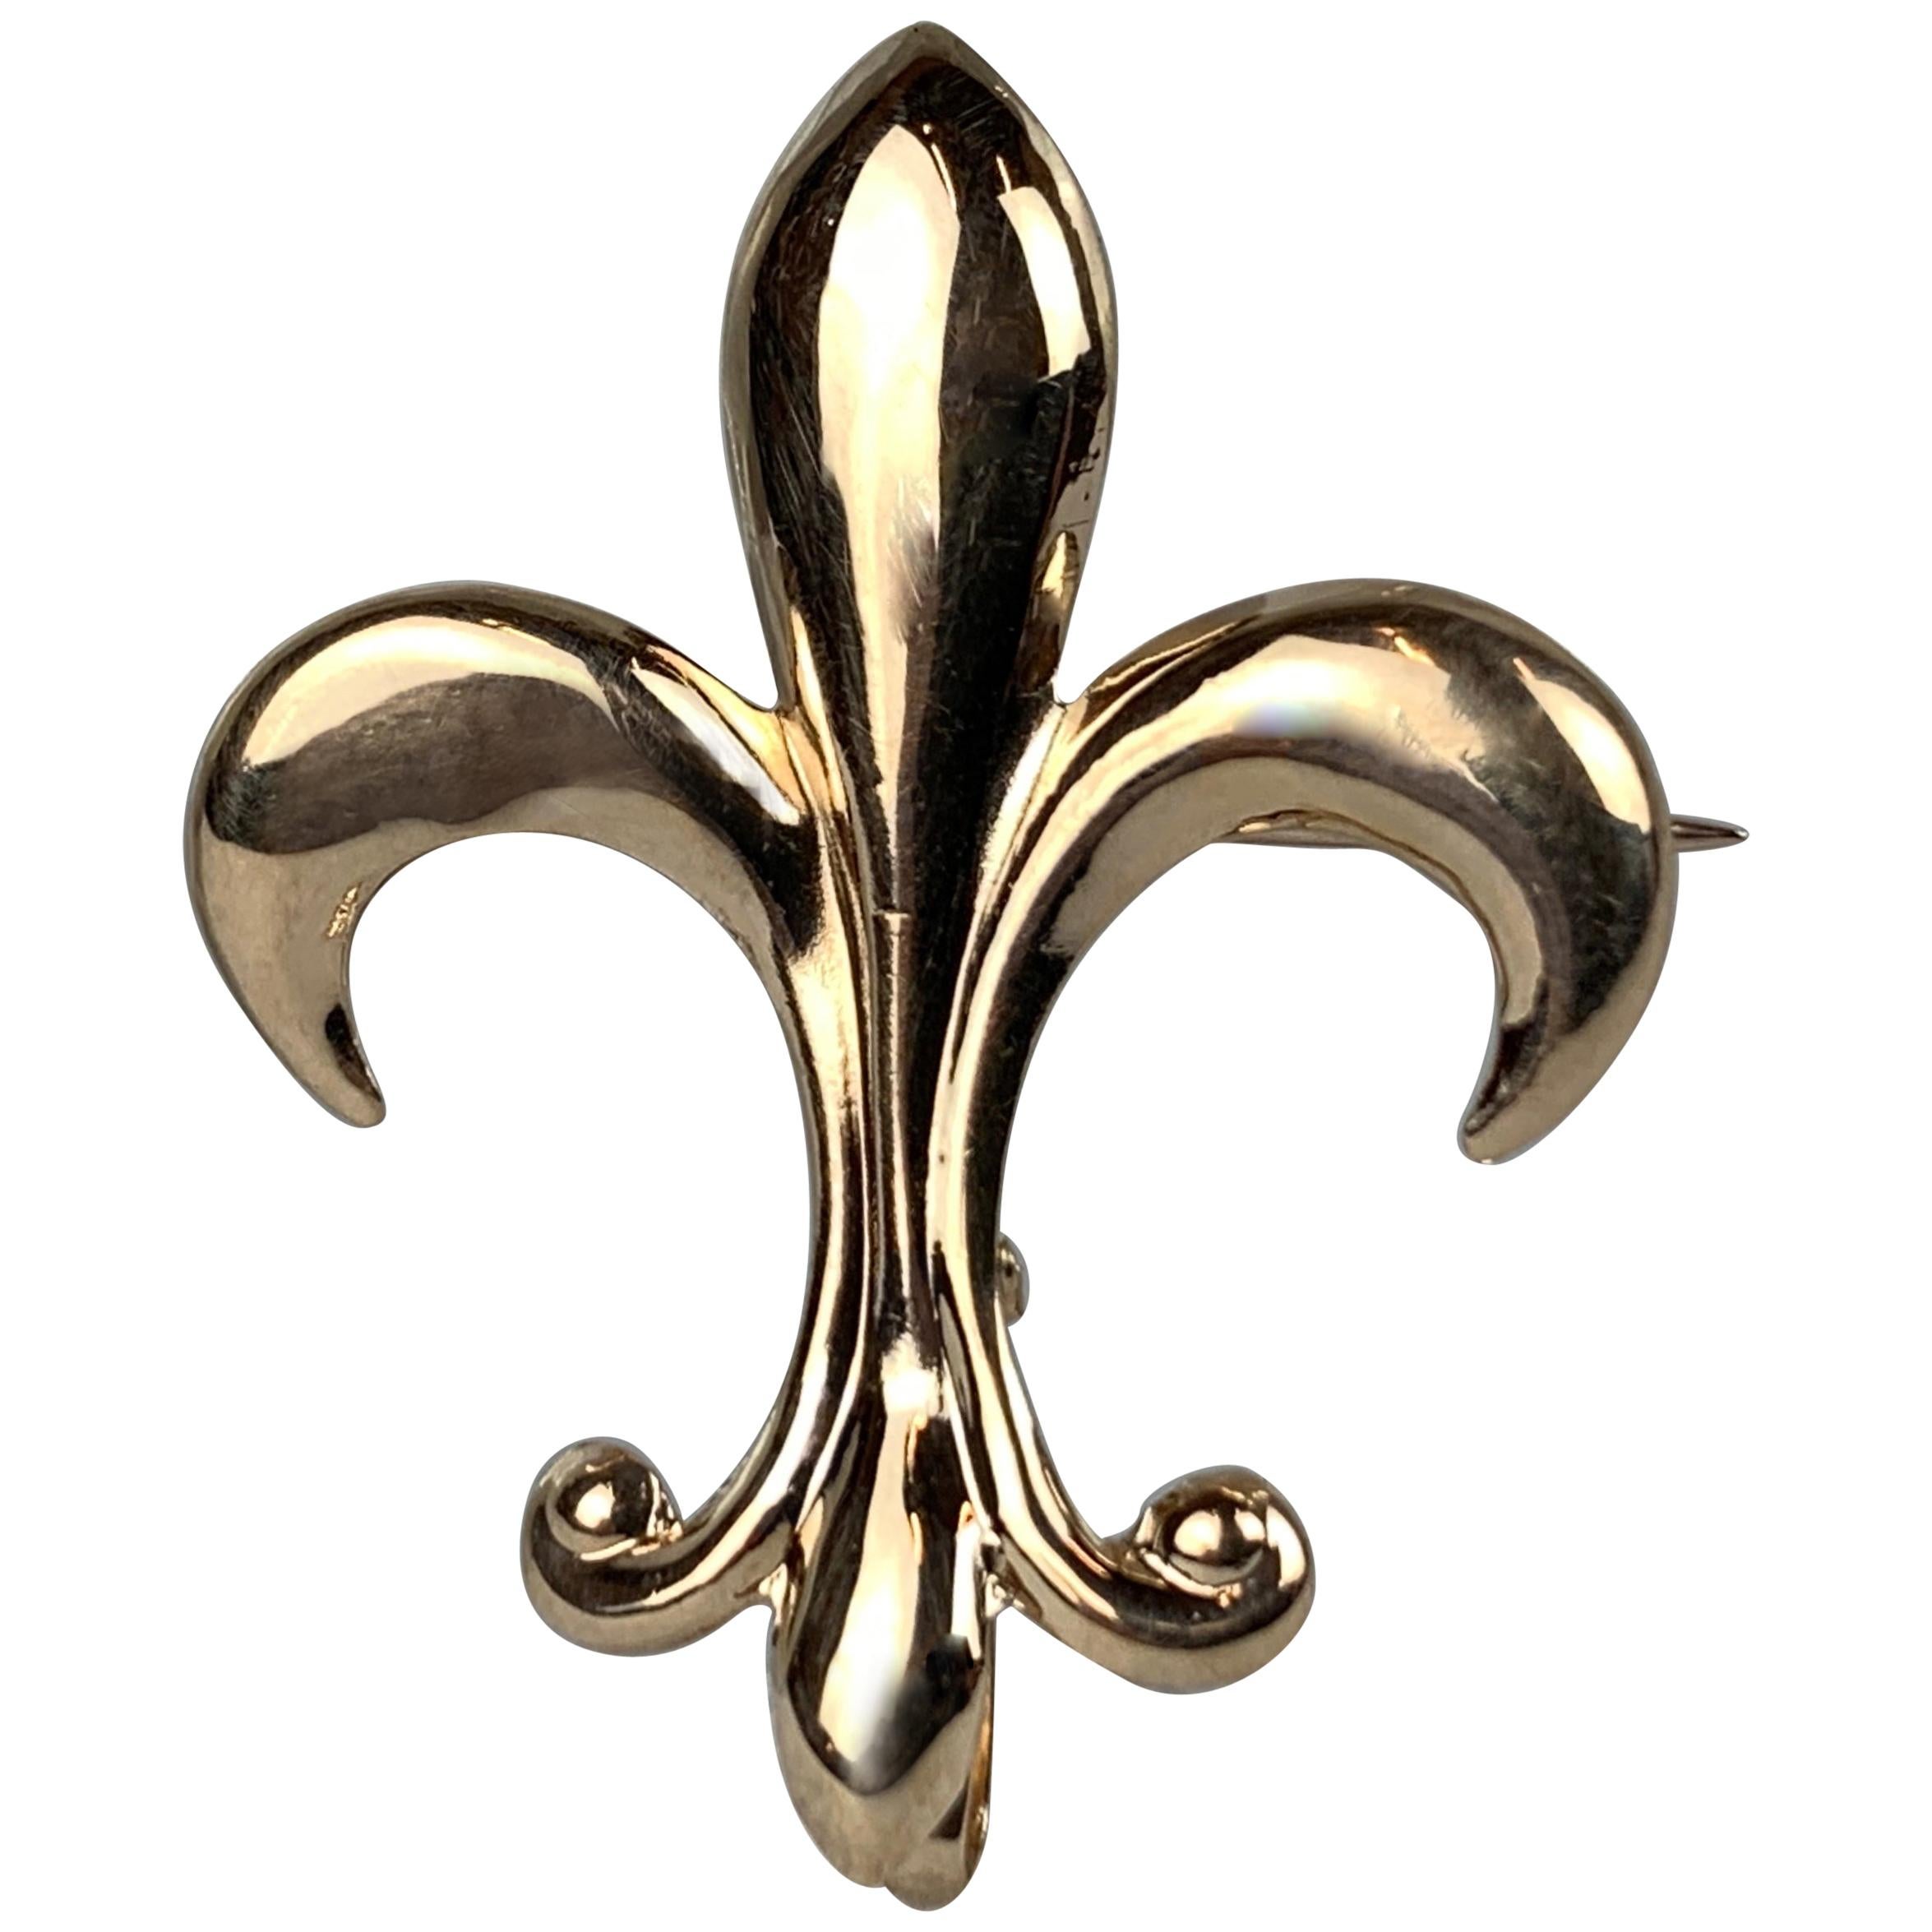  Gold Watch Pin-The "Fleur-de-Lis" A Sign of Nobility-14k y.g.